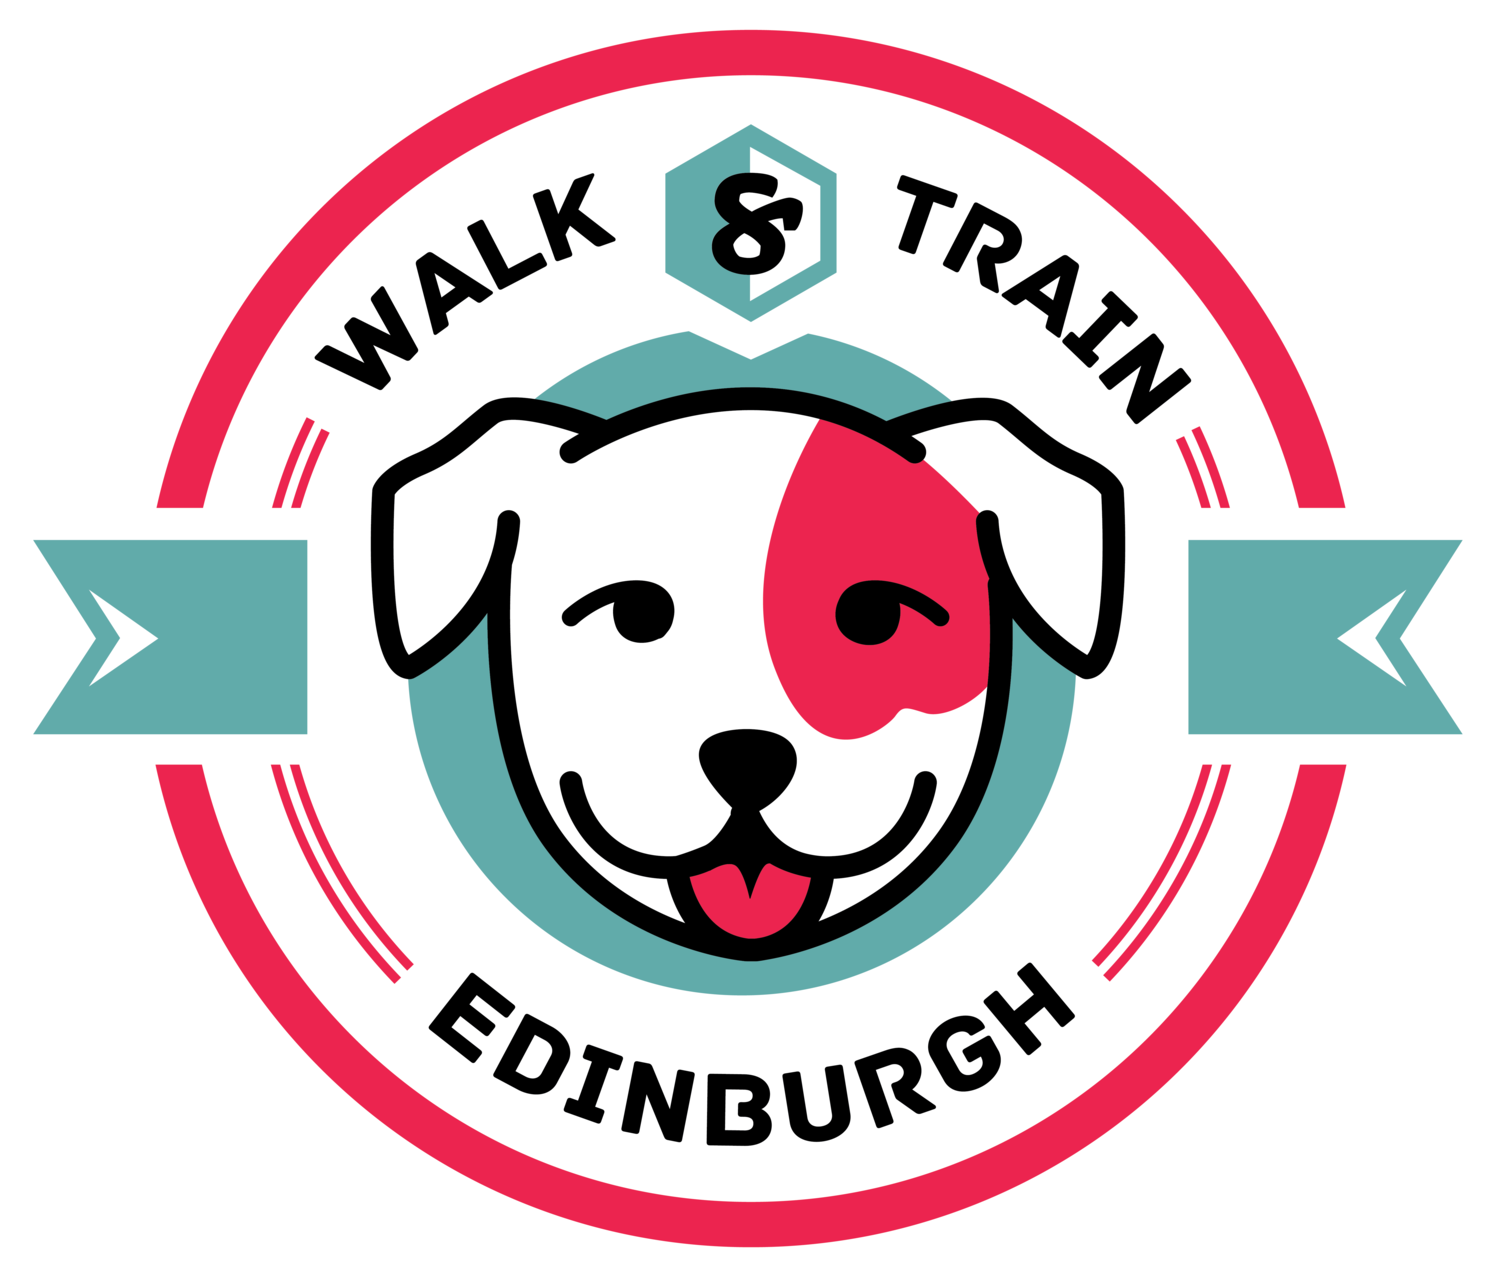 Walk & Train Edinburgh logo